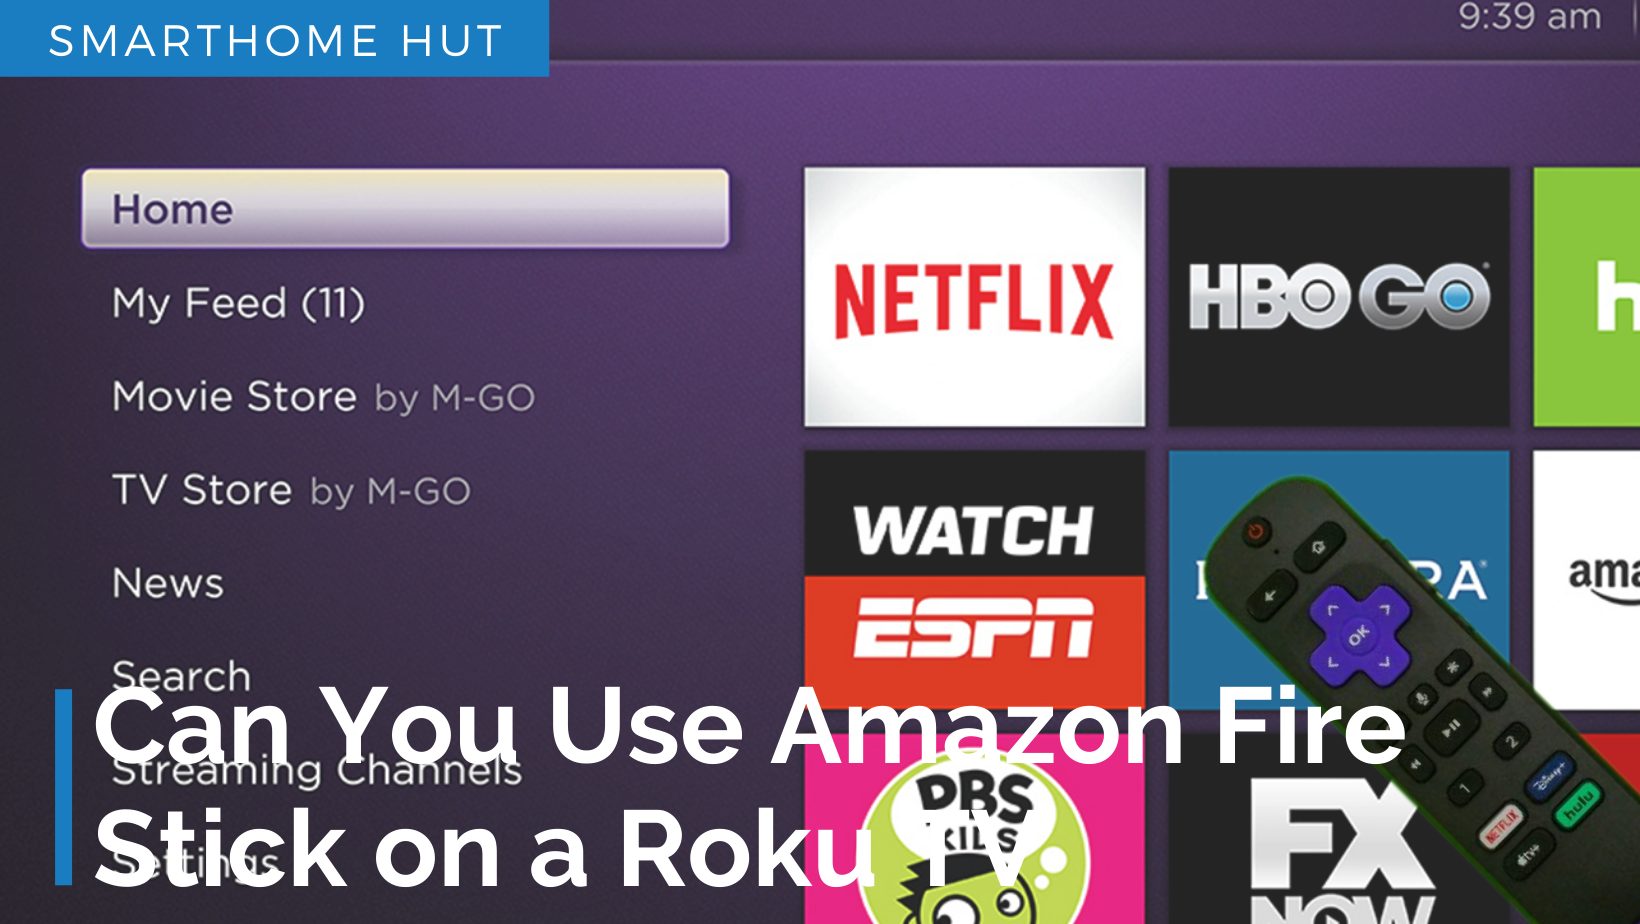 Can You Use Amazon Fire Stick on a Roku TV